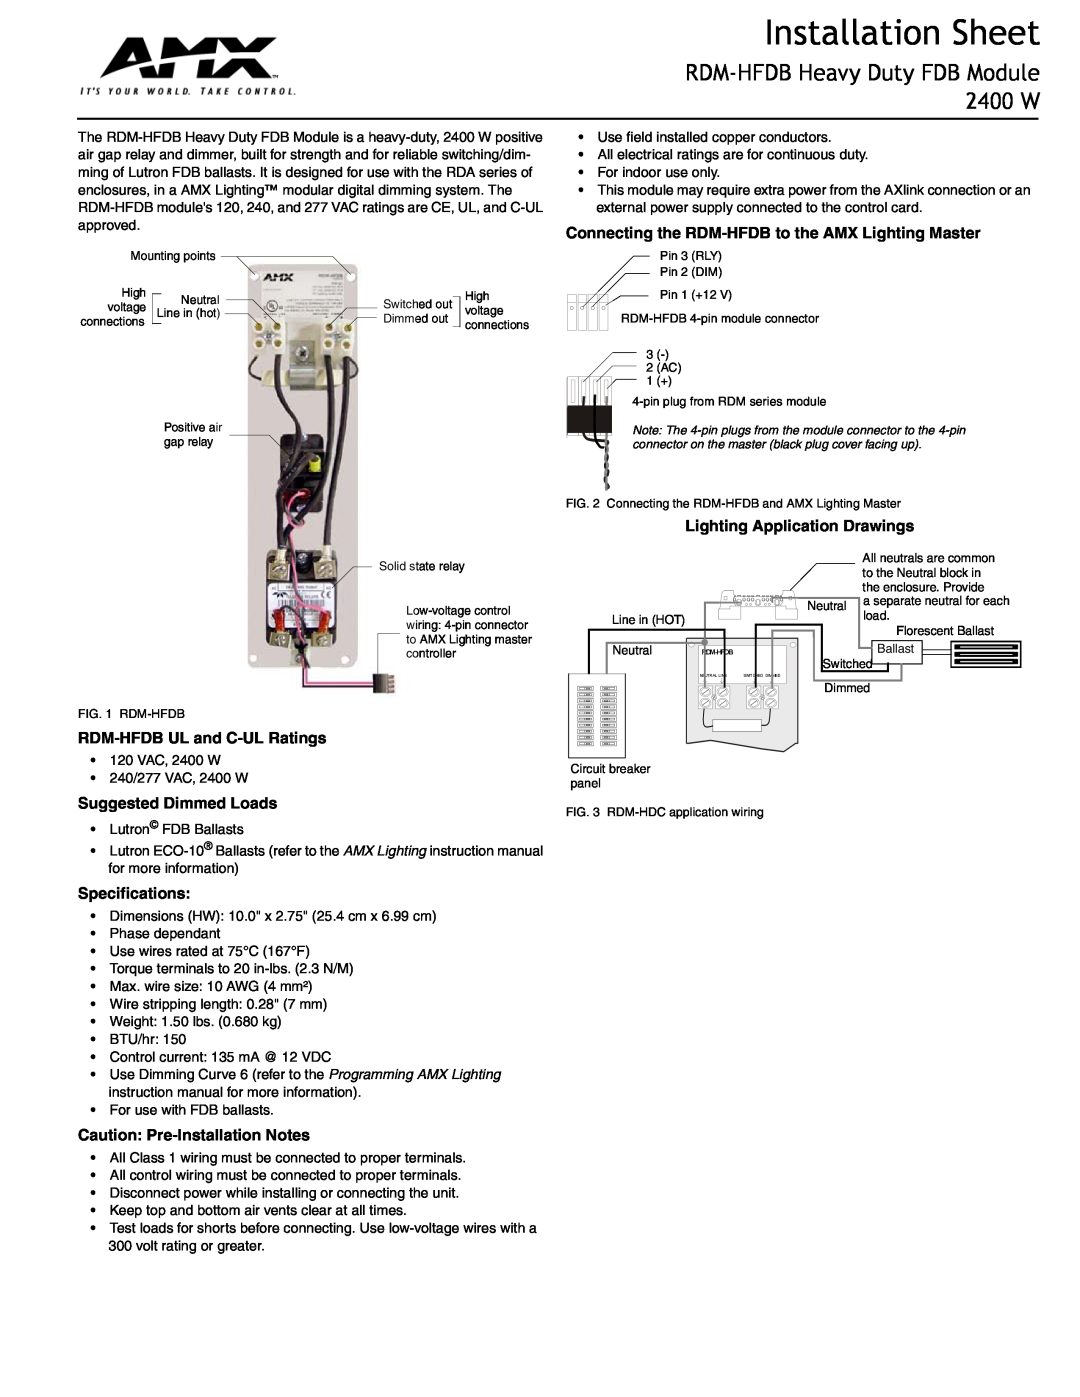 AMX specifications Installation Sheet, RDM-HFDB Heavy Duty FDB Module 2400 W, Lighting Application Drawings 